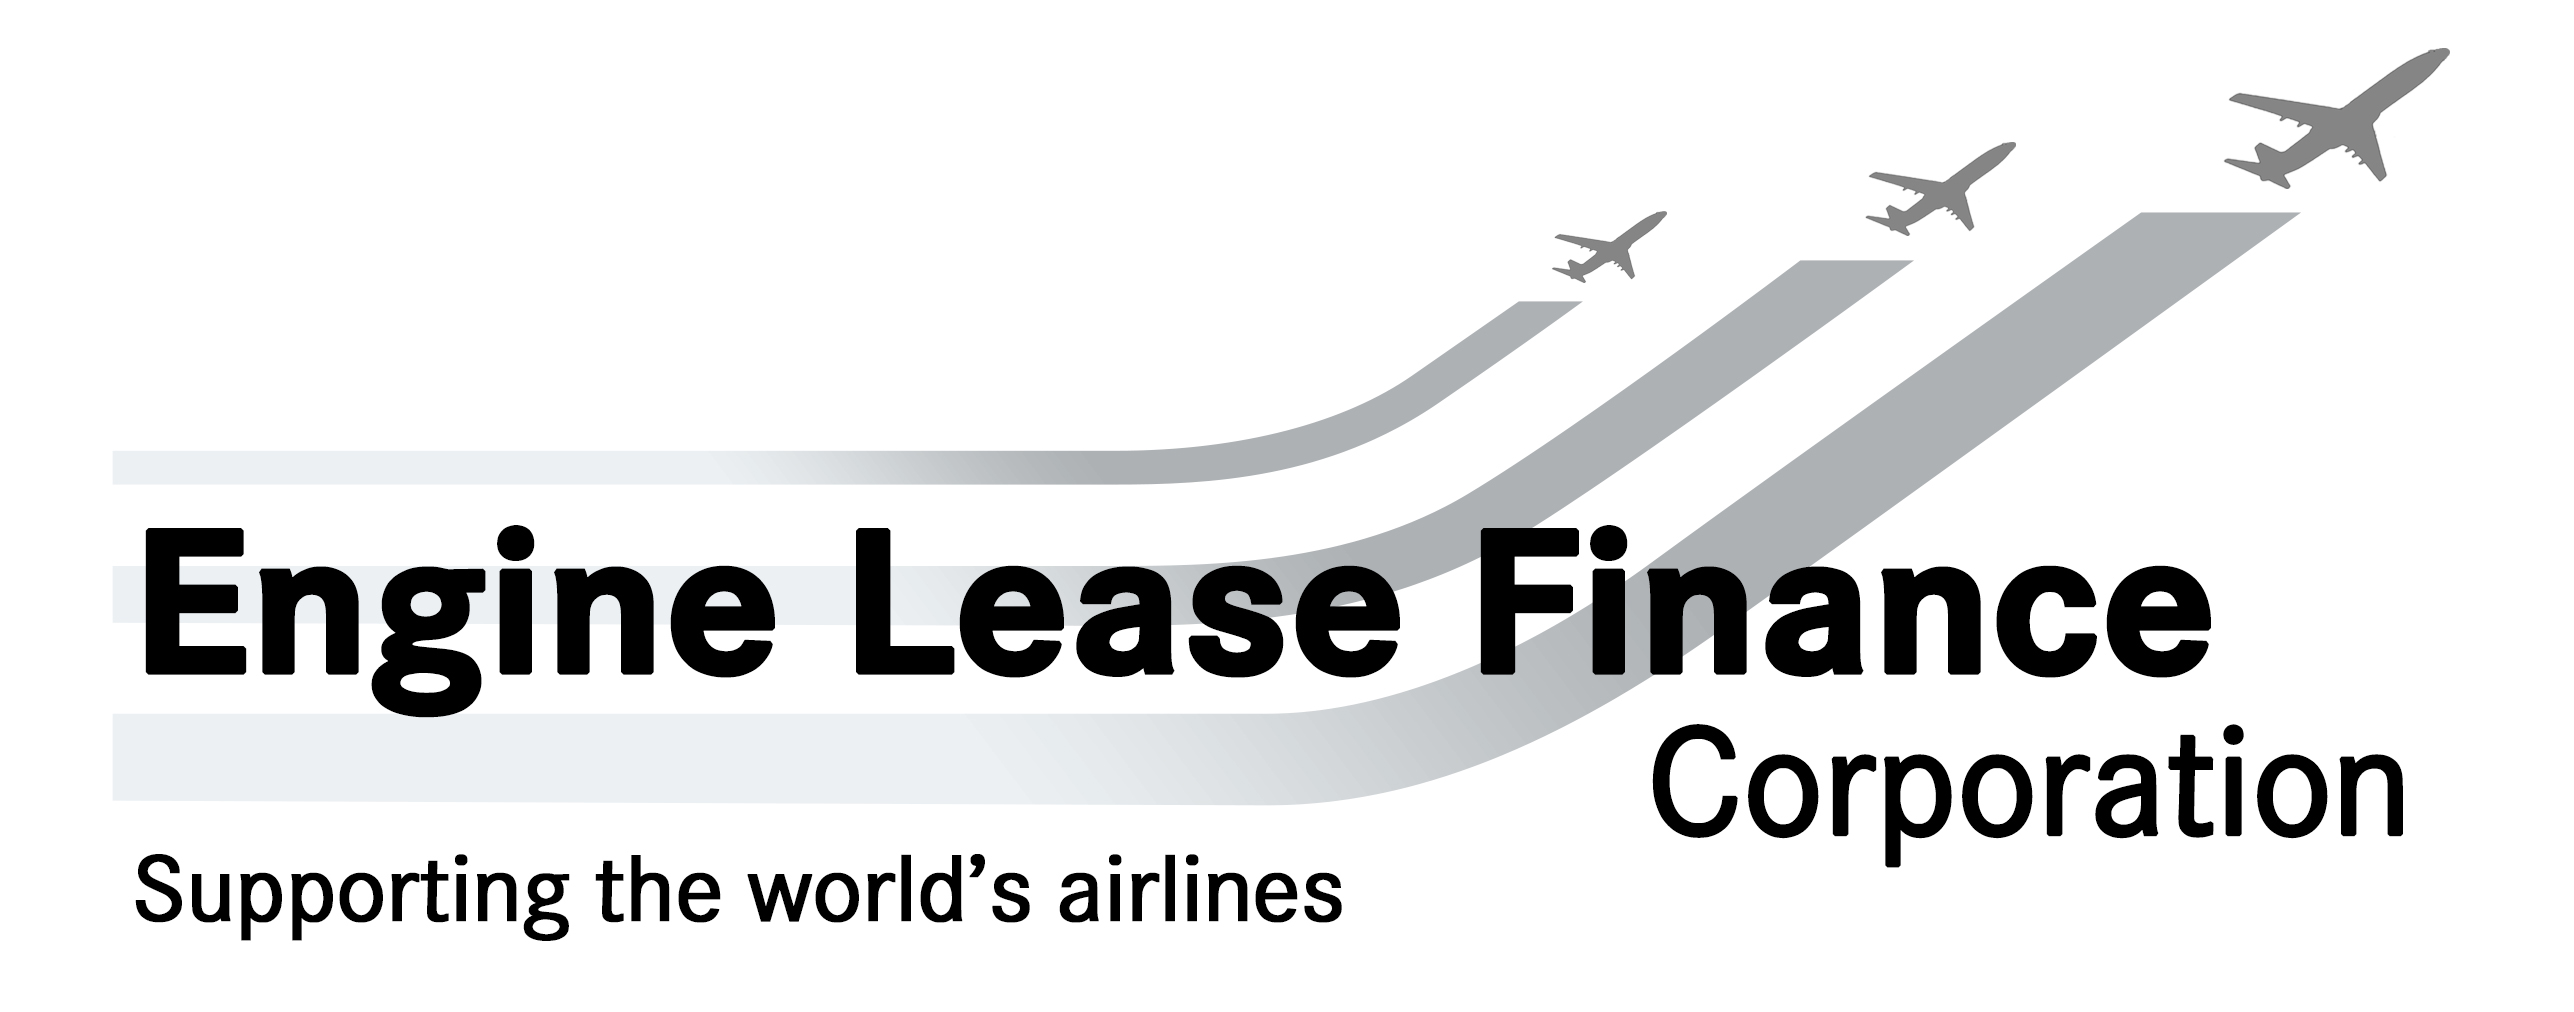 Engine Lease Finance Corporation